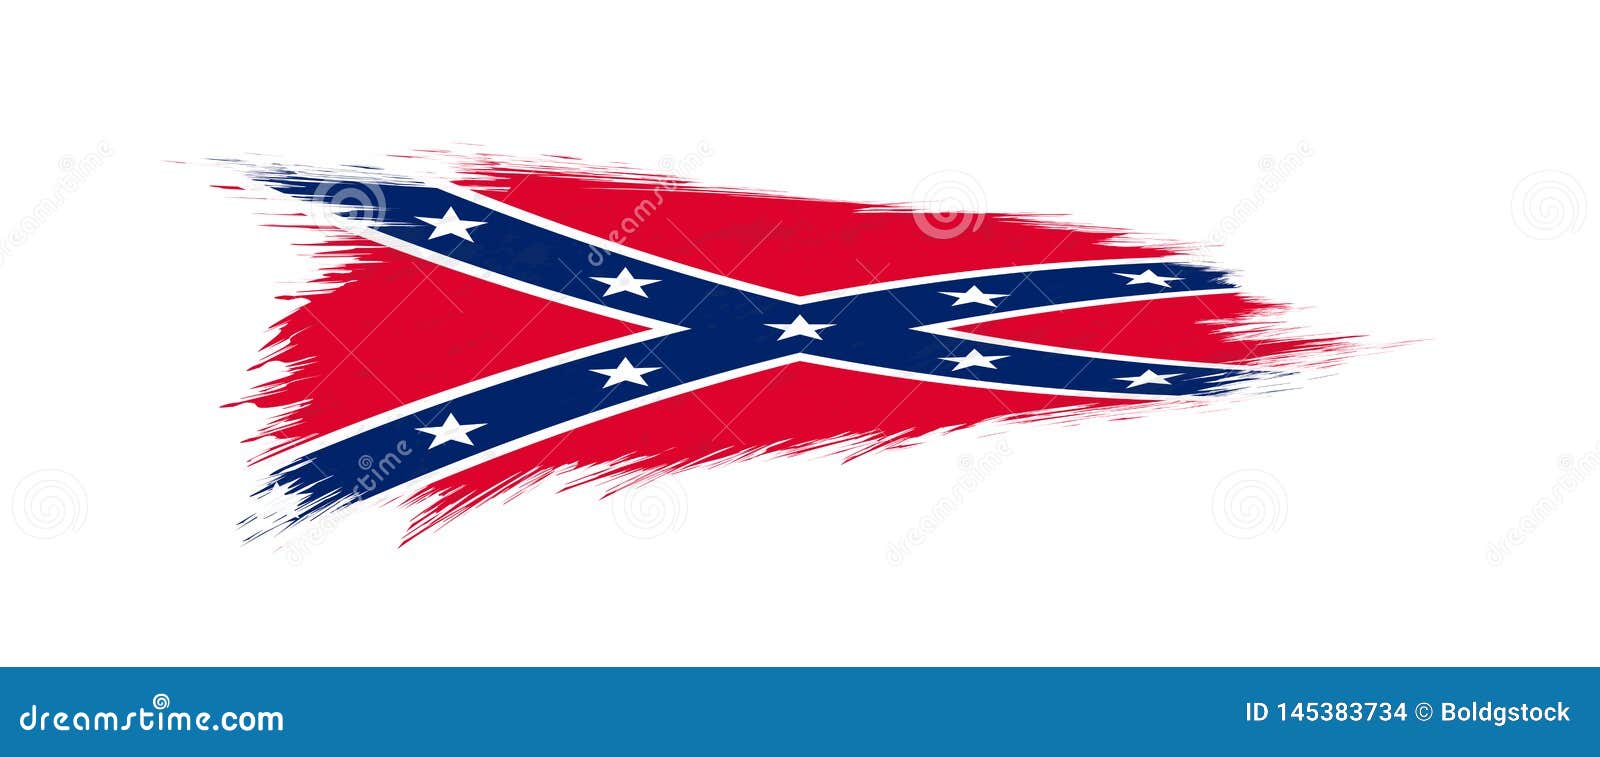 flag of confederate in grunge brush